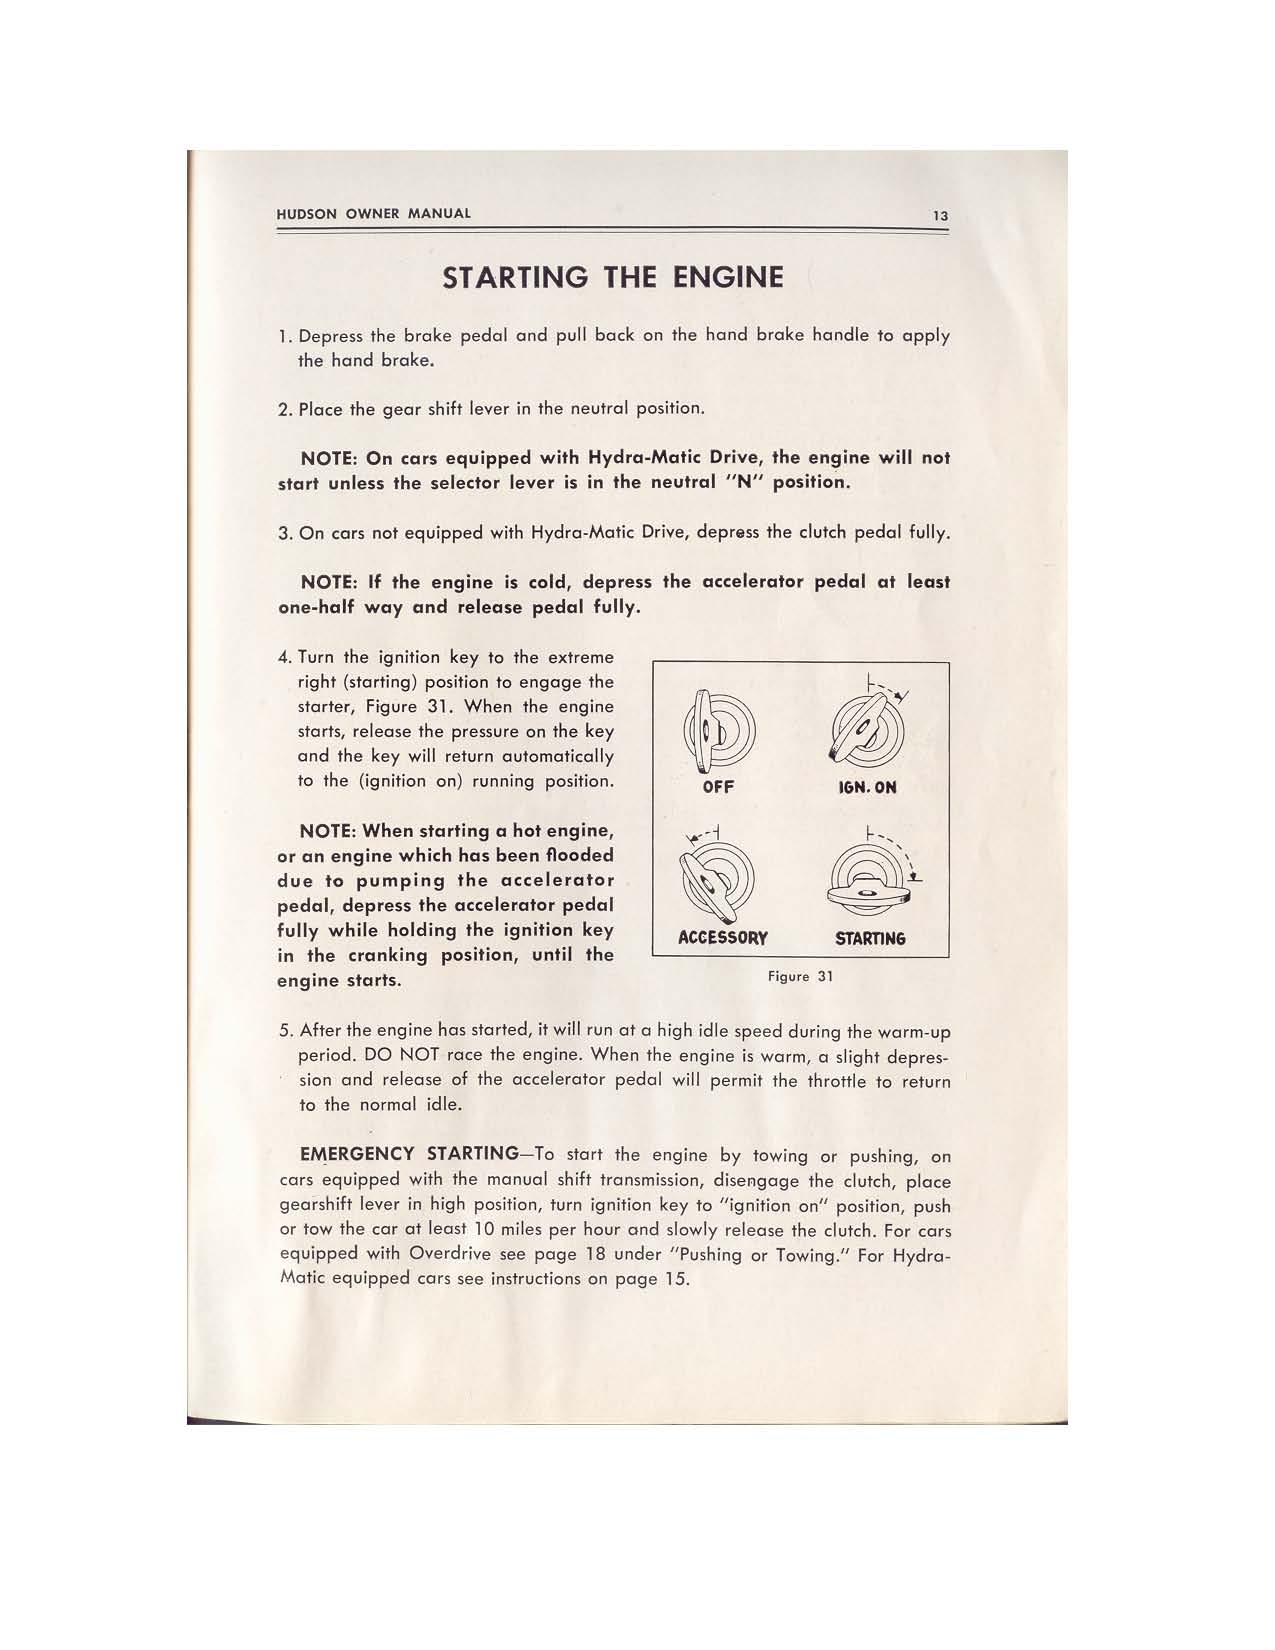 1953 Hudson Jet Owners Manual-14